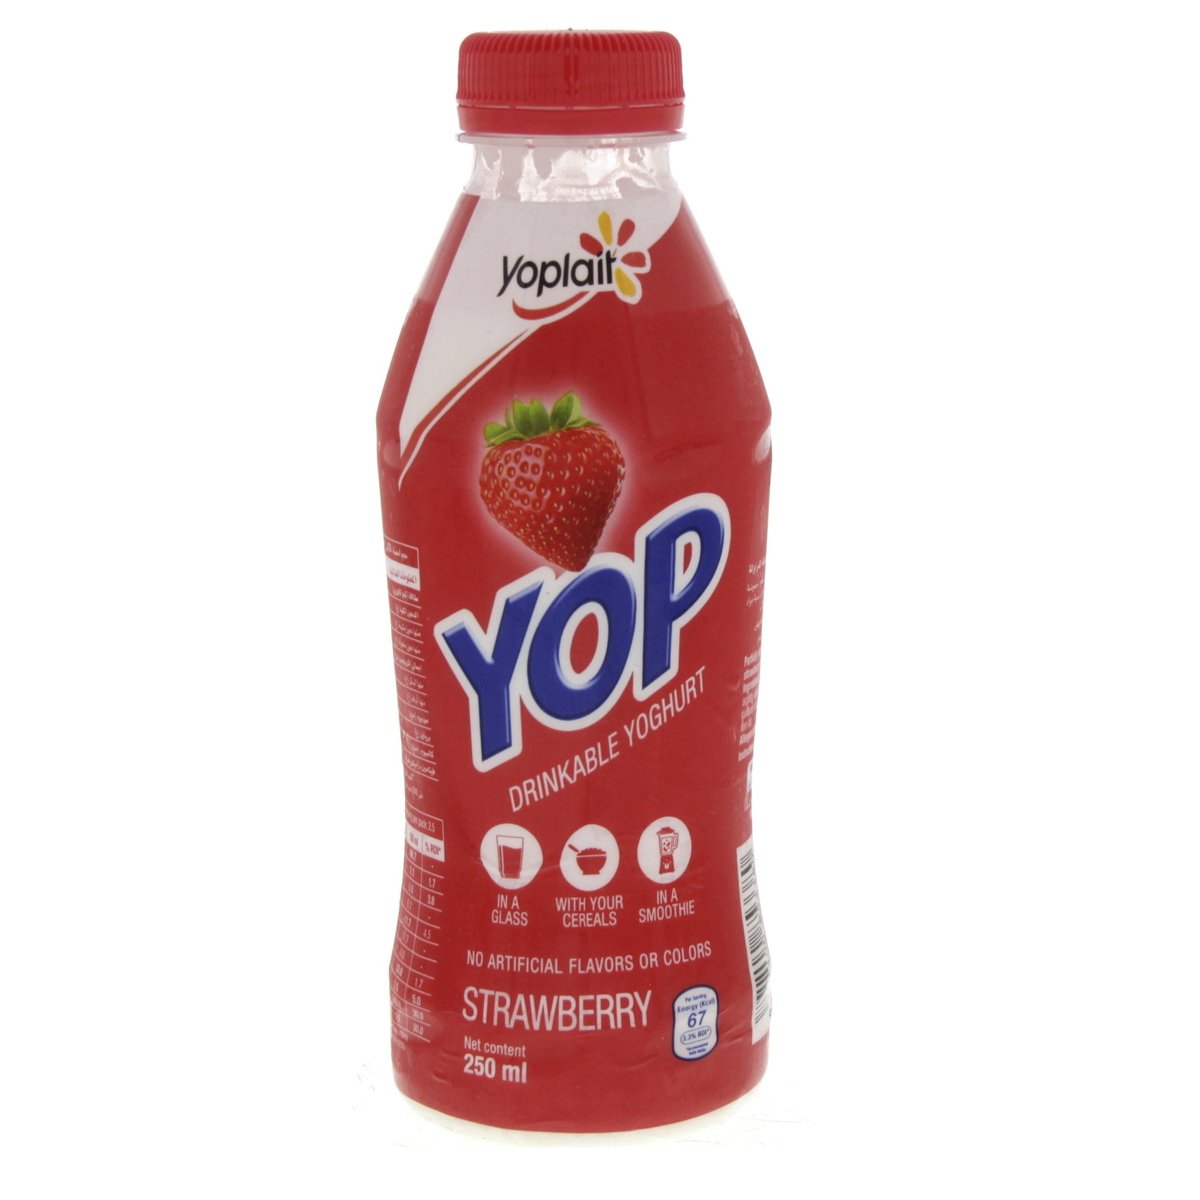 Yoplait Yop Drinkable Yoghurt Strawberry 250 ml